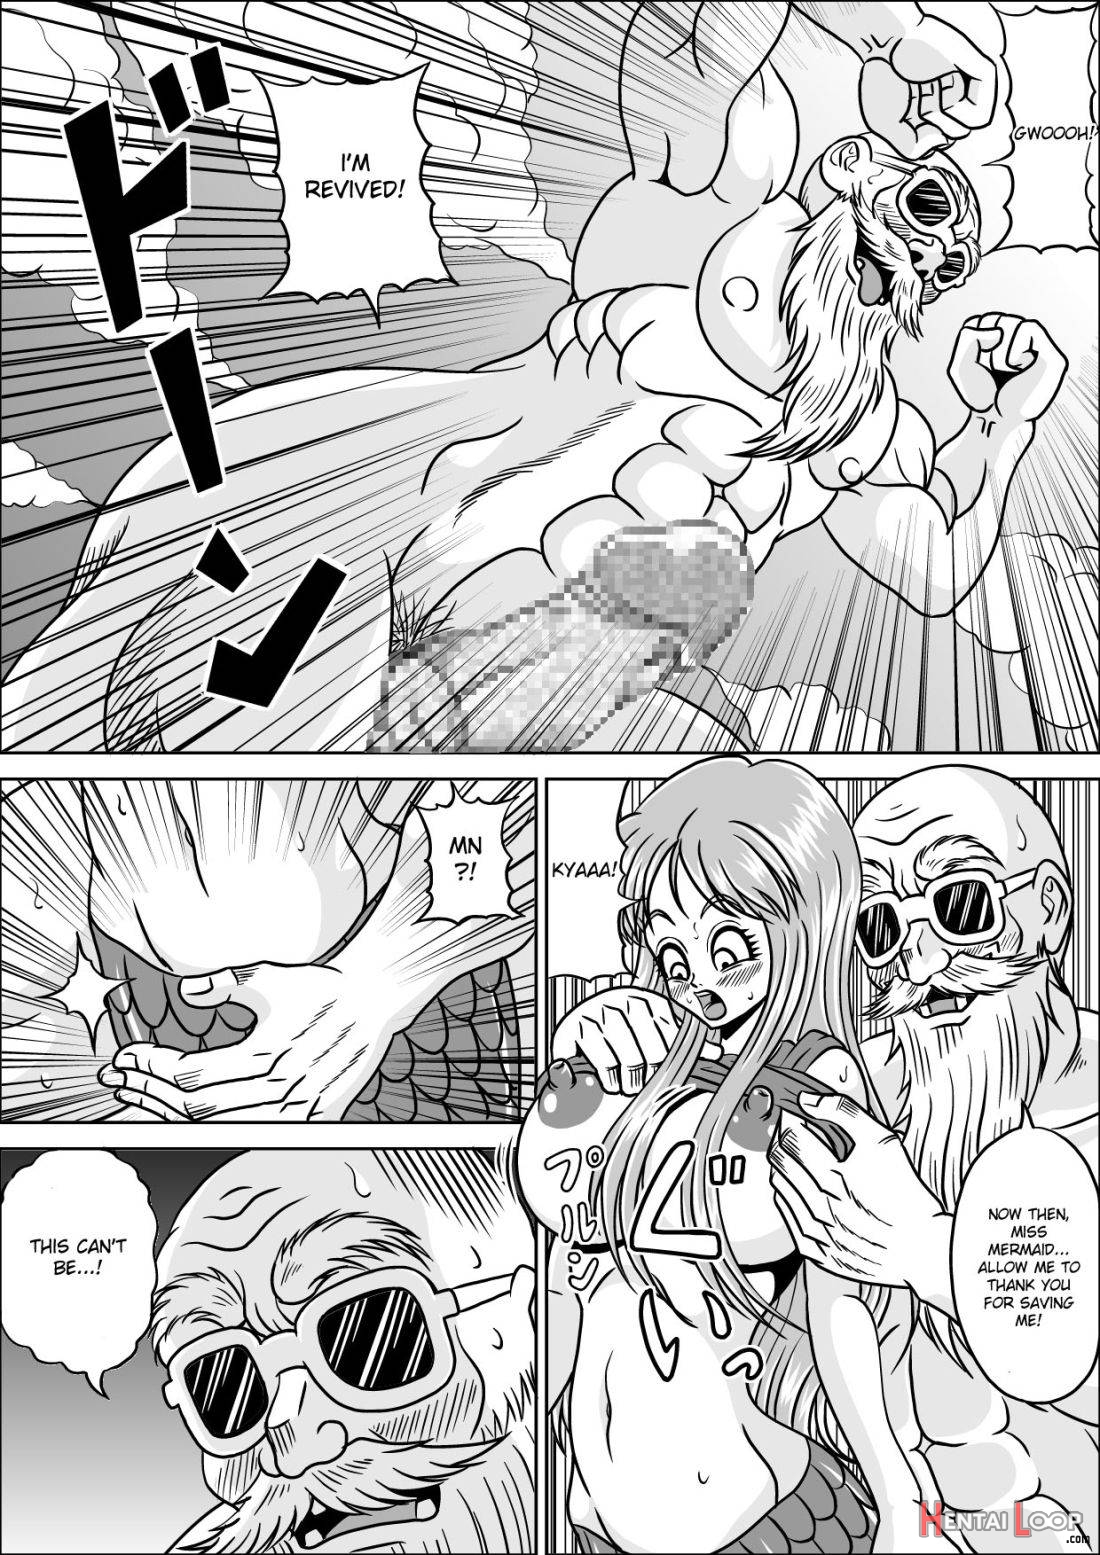 Kame Sennin no Yabou III page 9